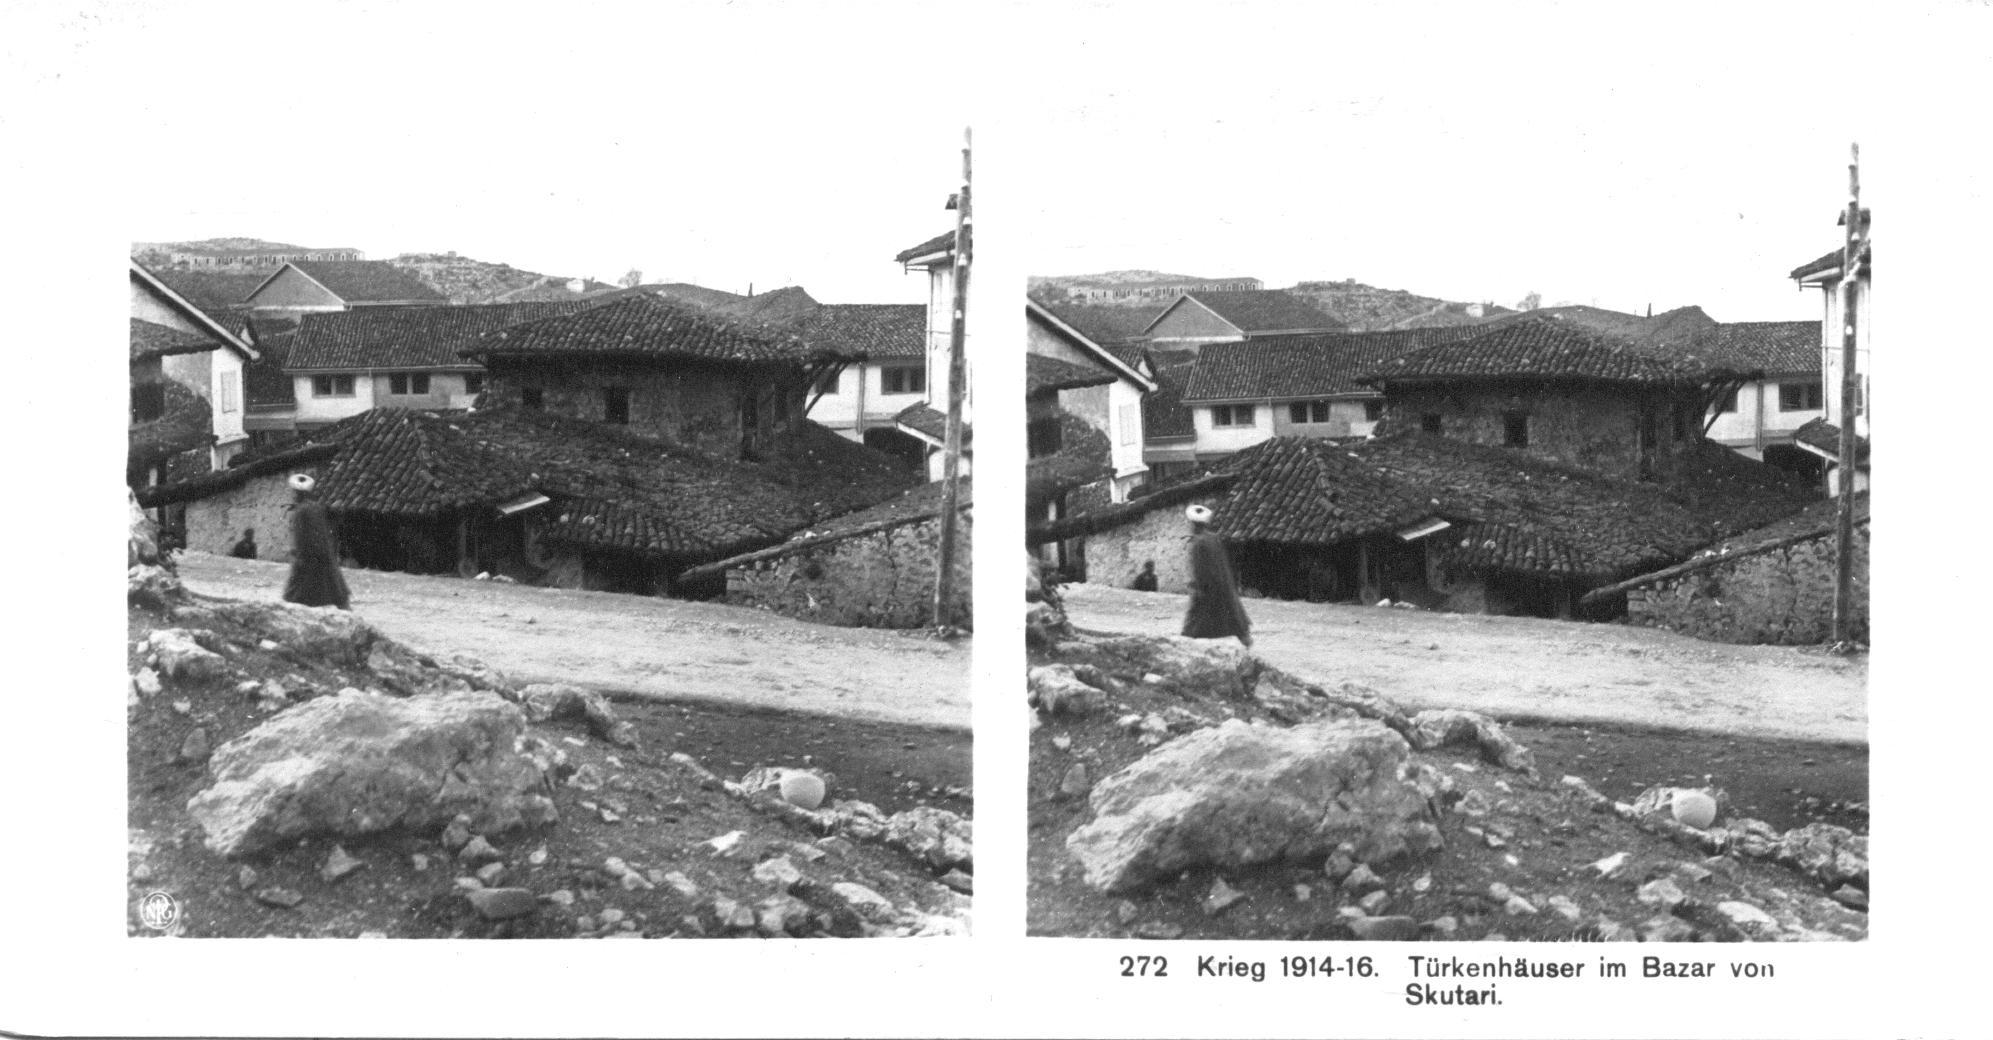 "Türkenhäuser im Bazar von Skutari" - Turkish houses in the Skadar bazaar